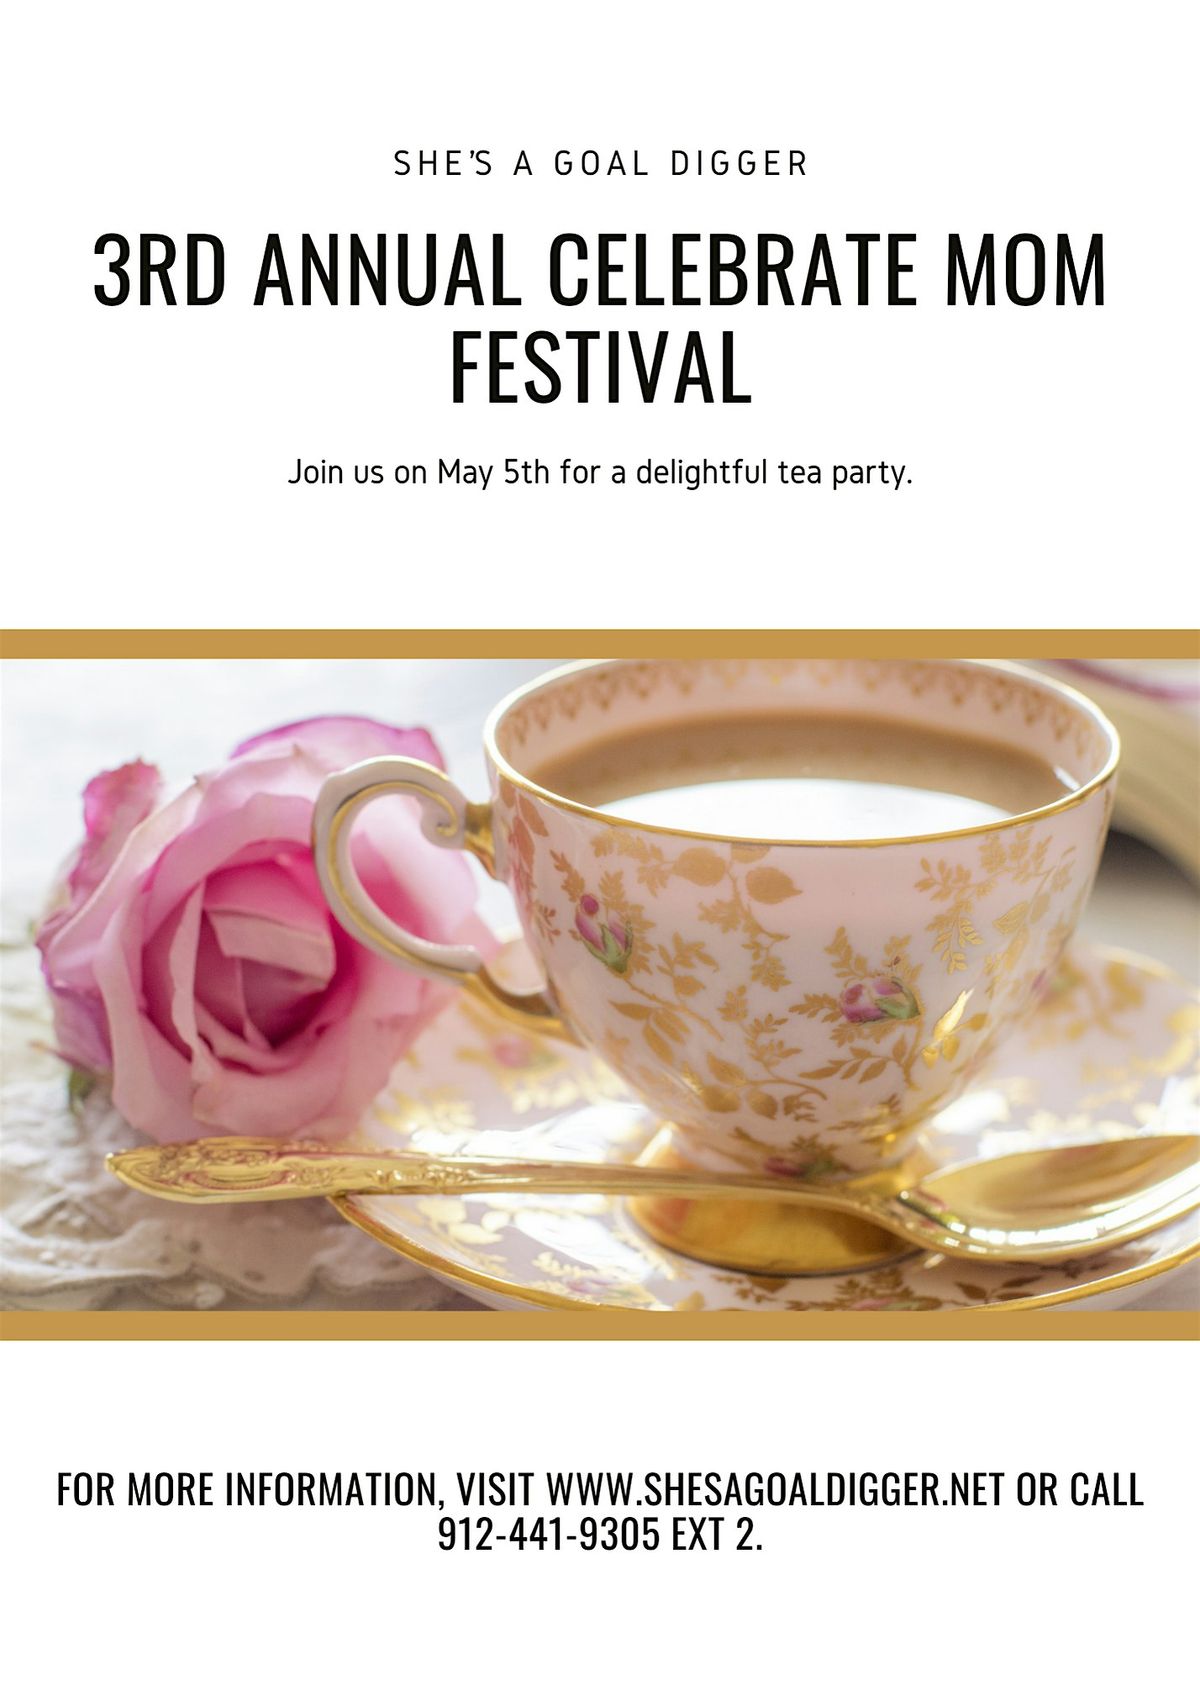 3rd Annual Celebrate Mom Festival - Tea Party